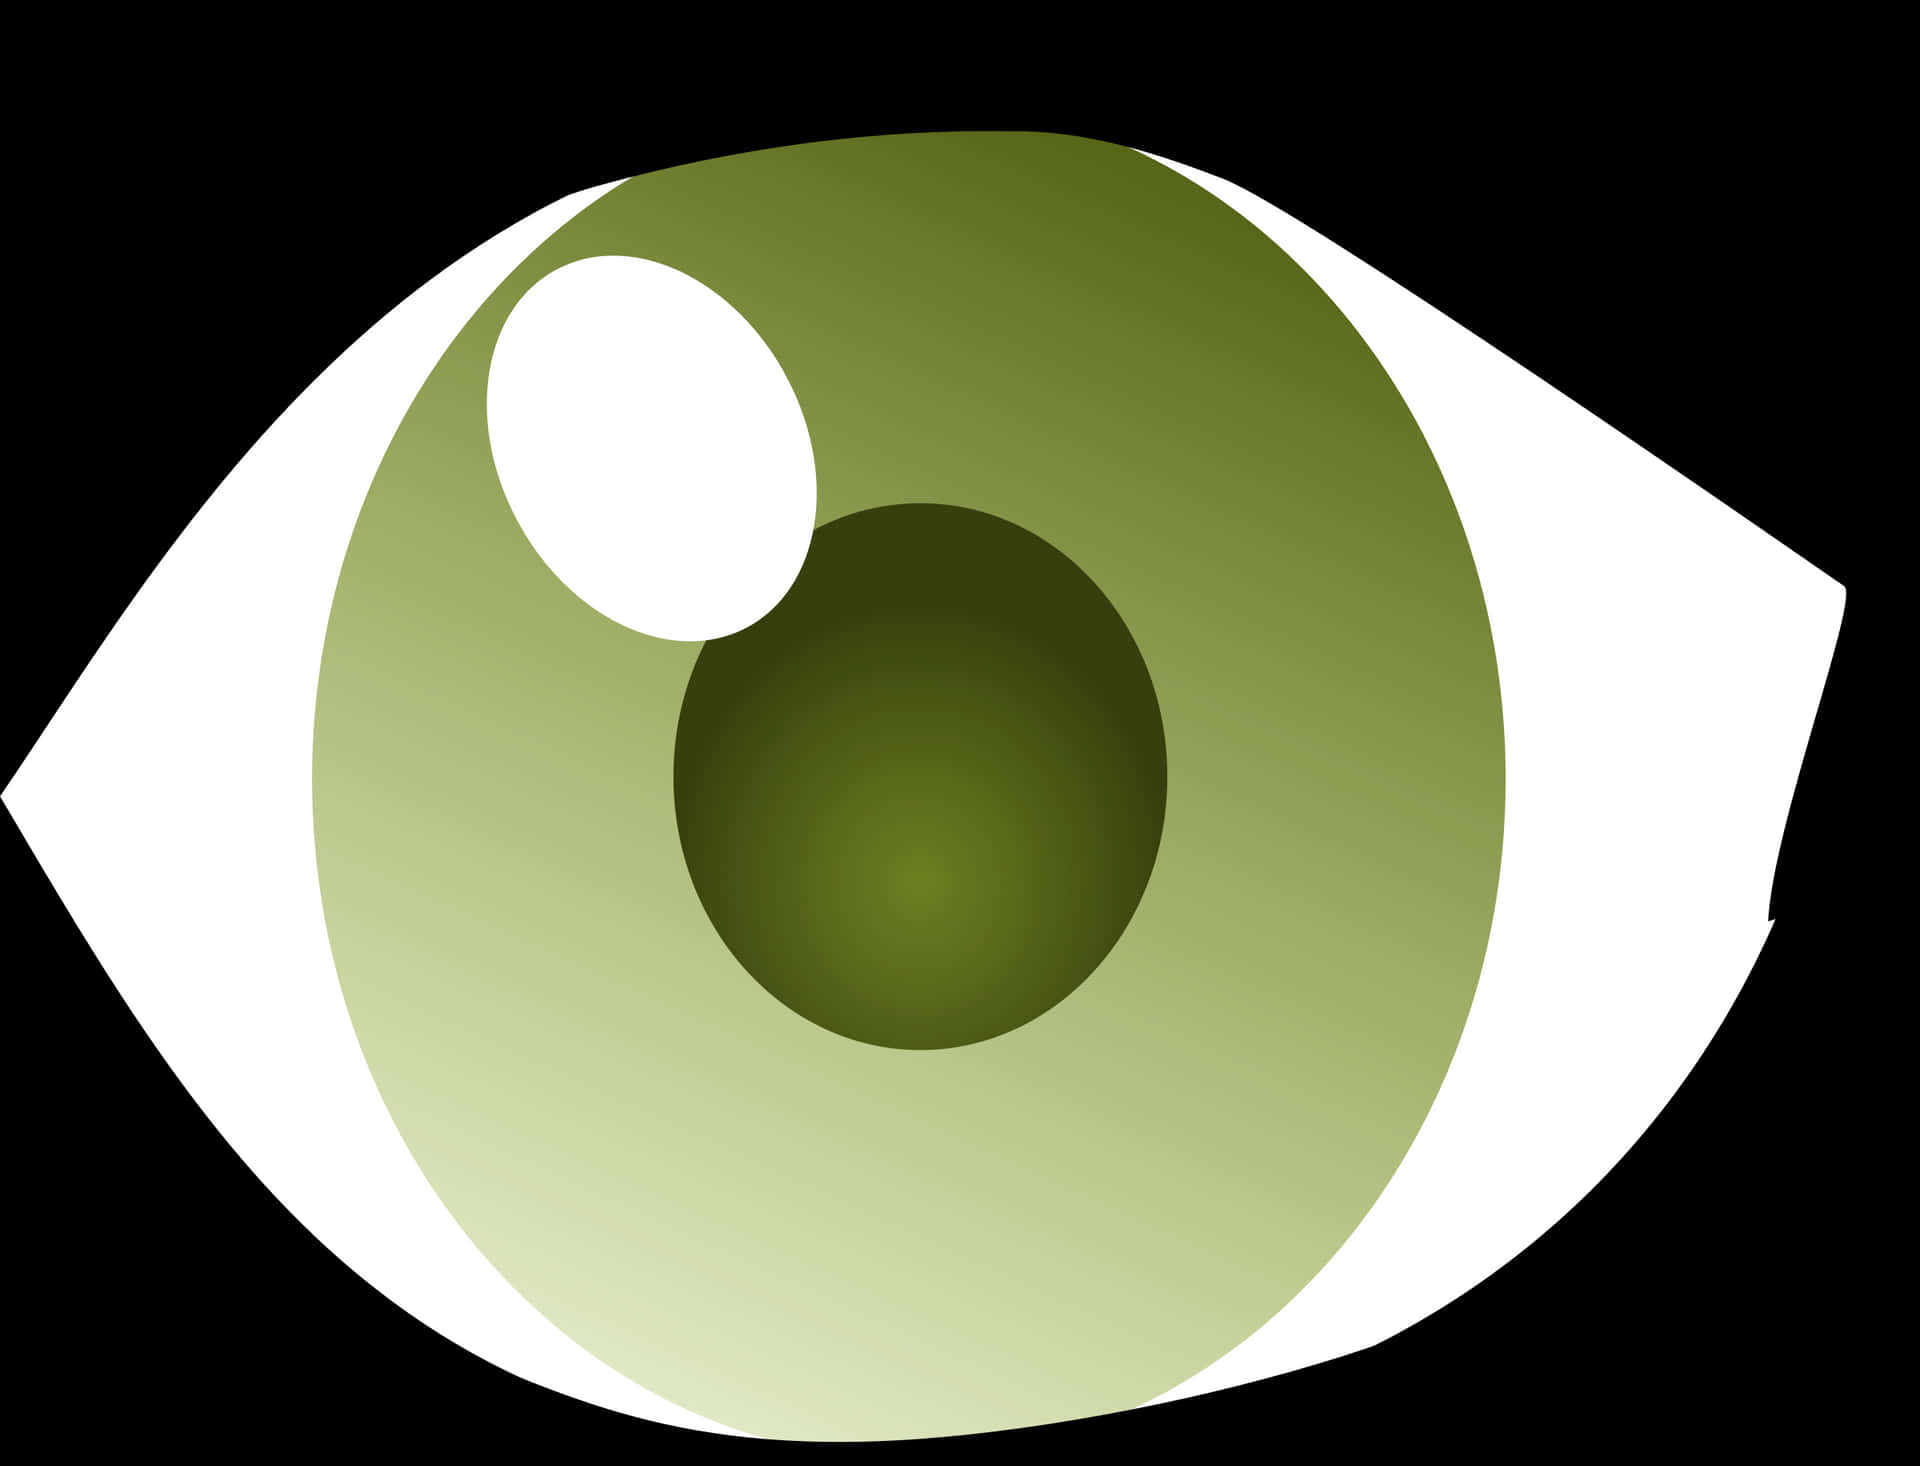 Abstract Green Eye Illustration.jpg PNG